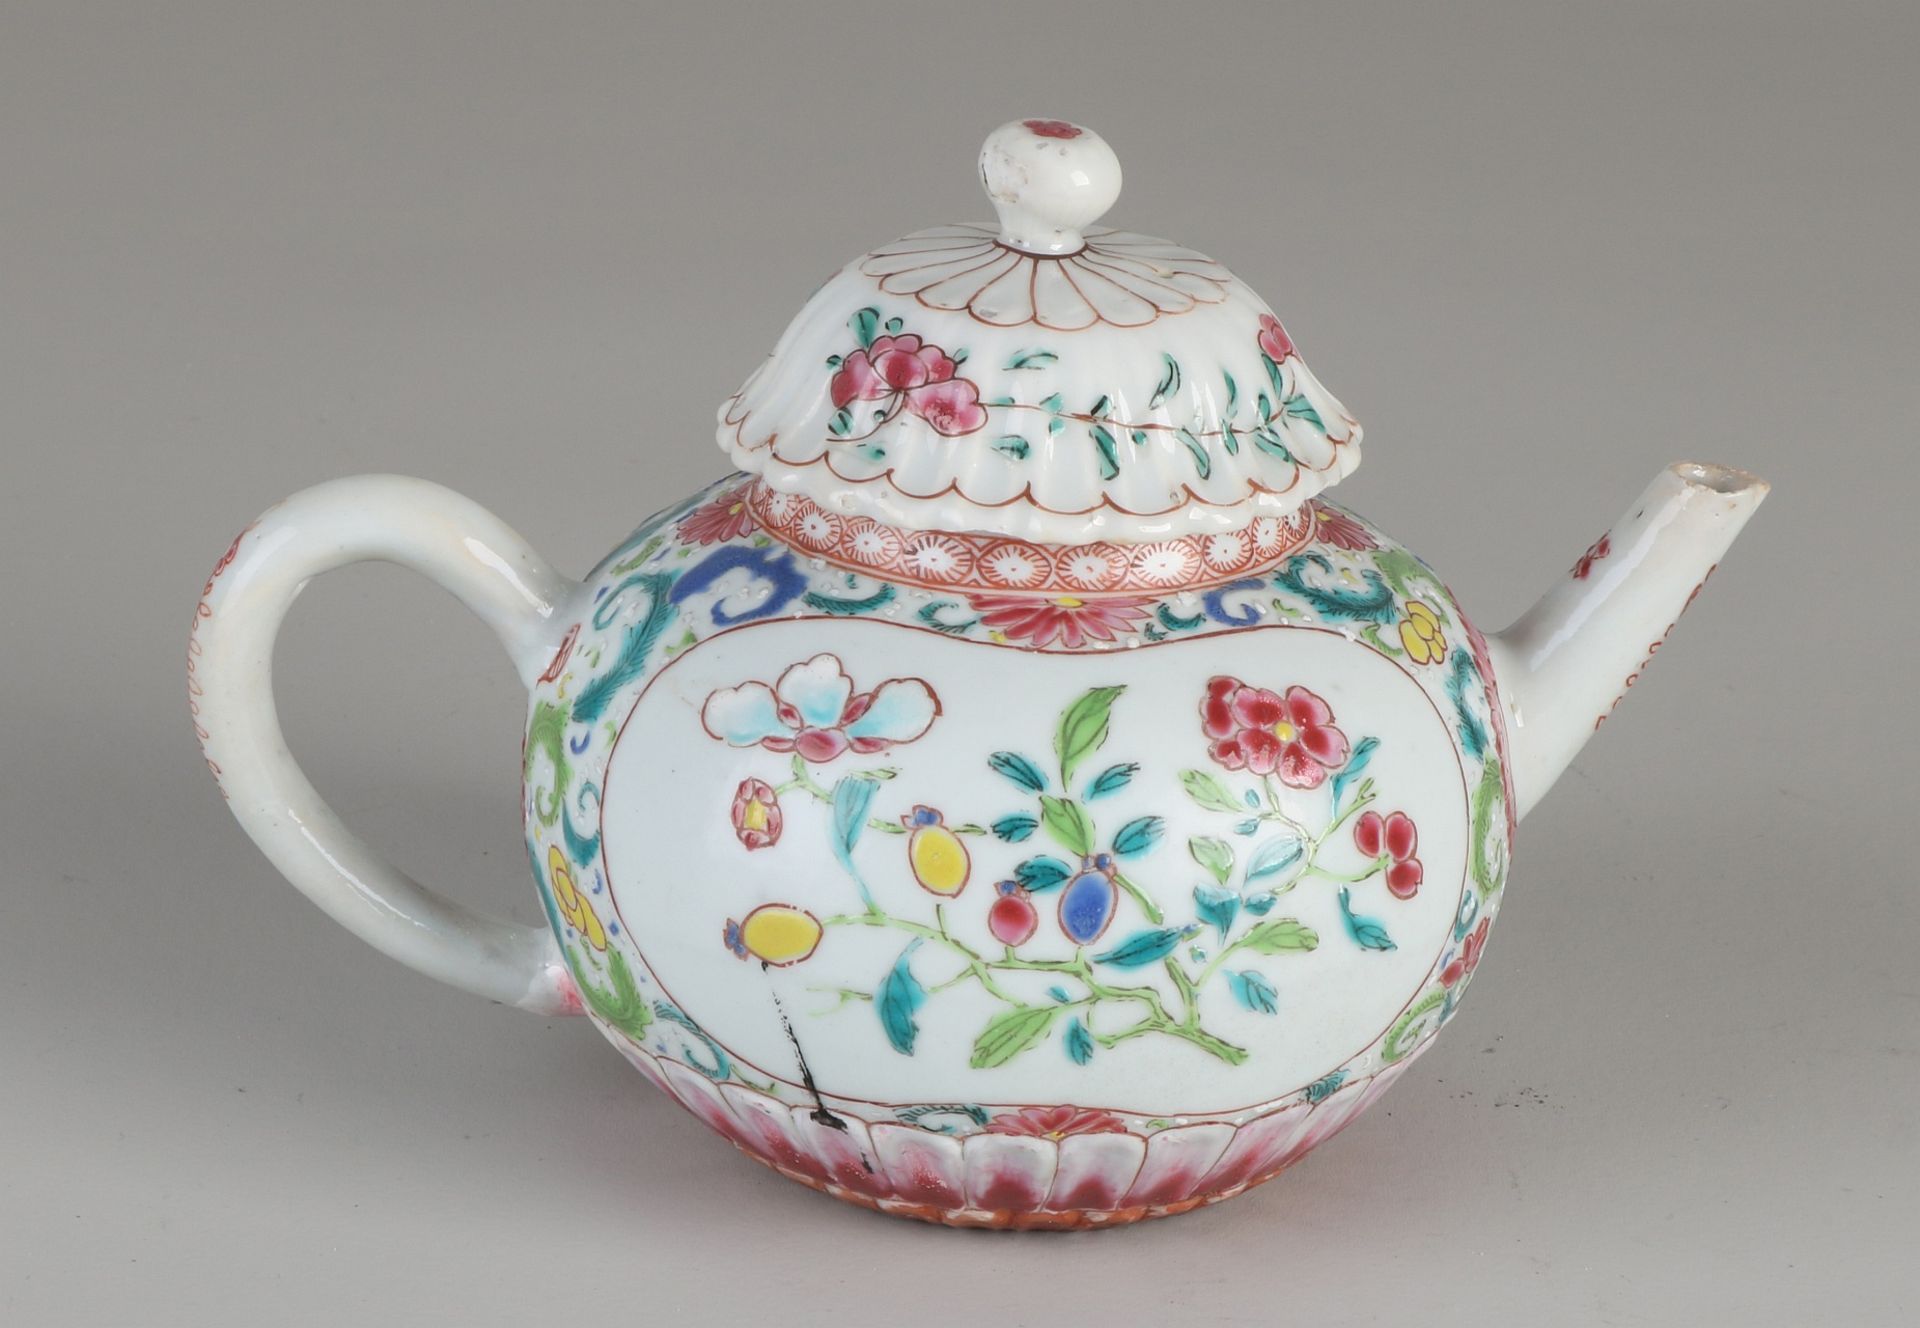 18th Century Family Rose teapot